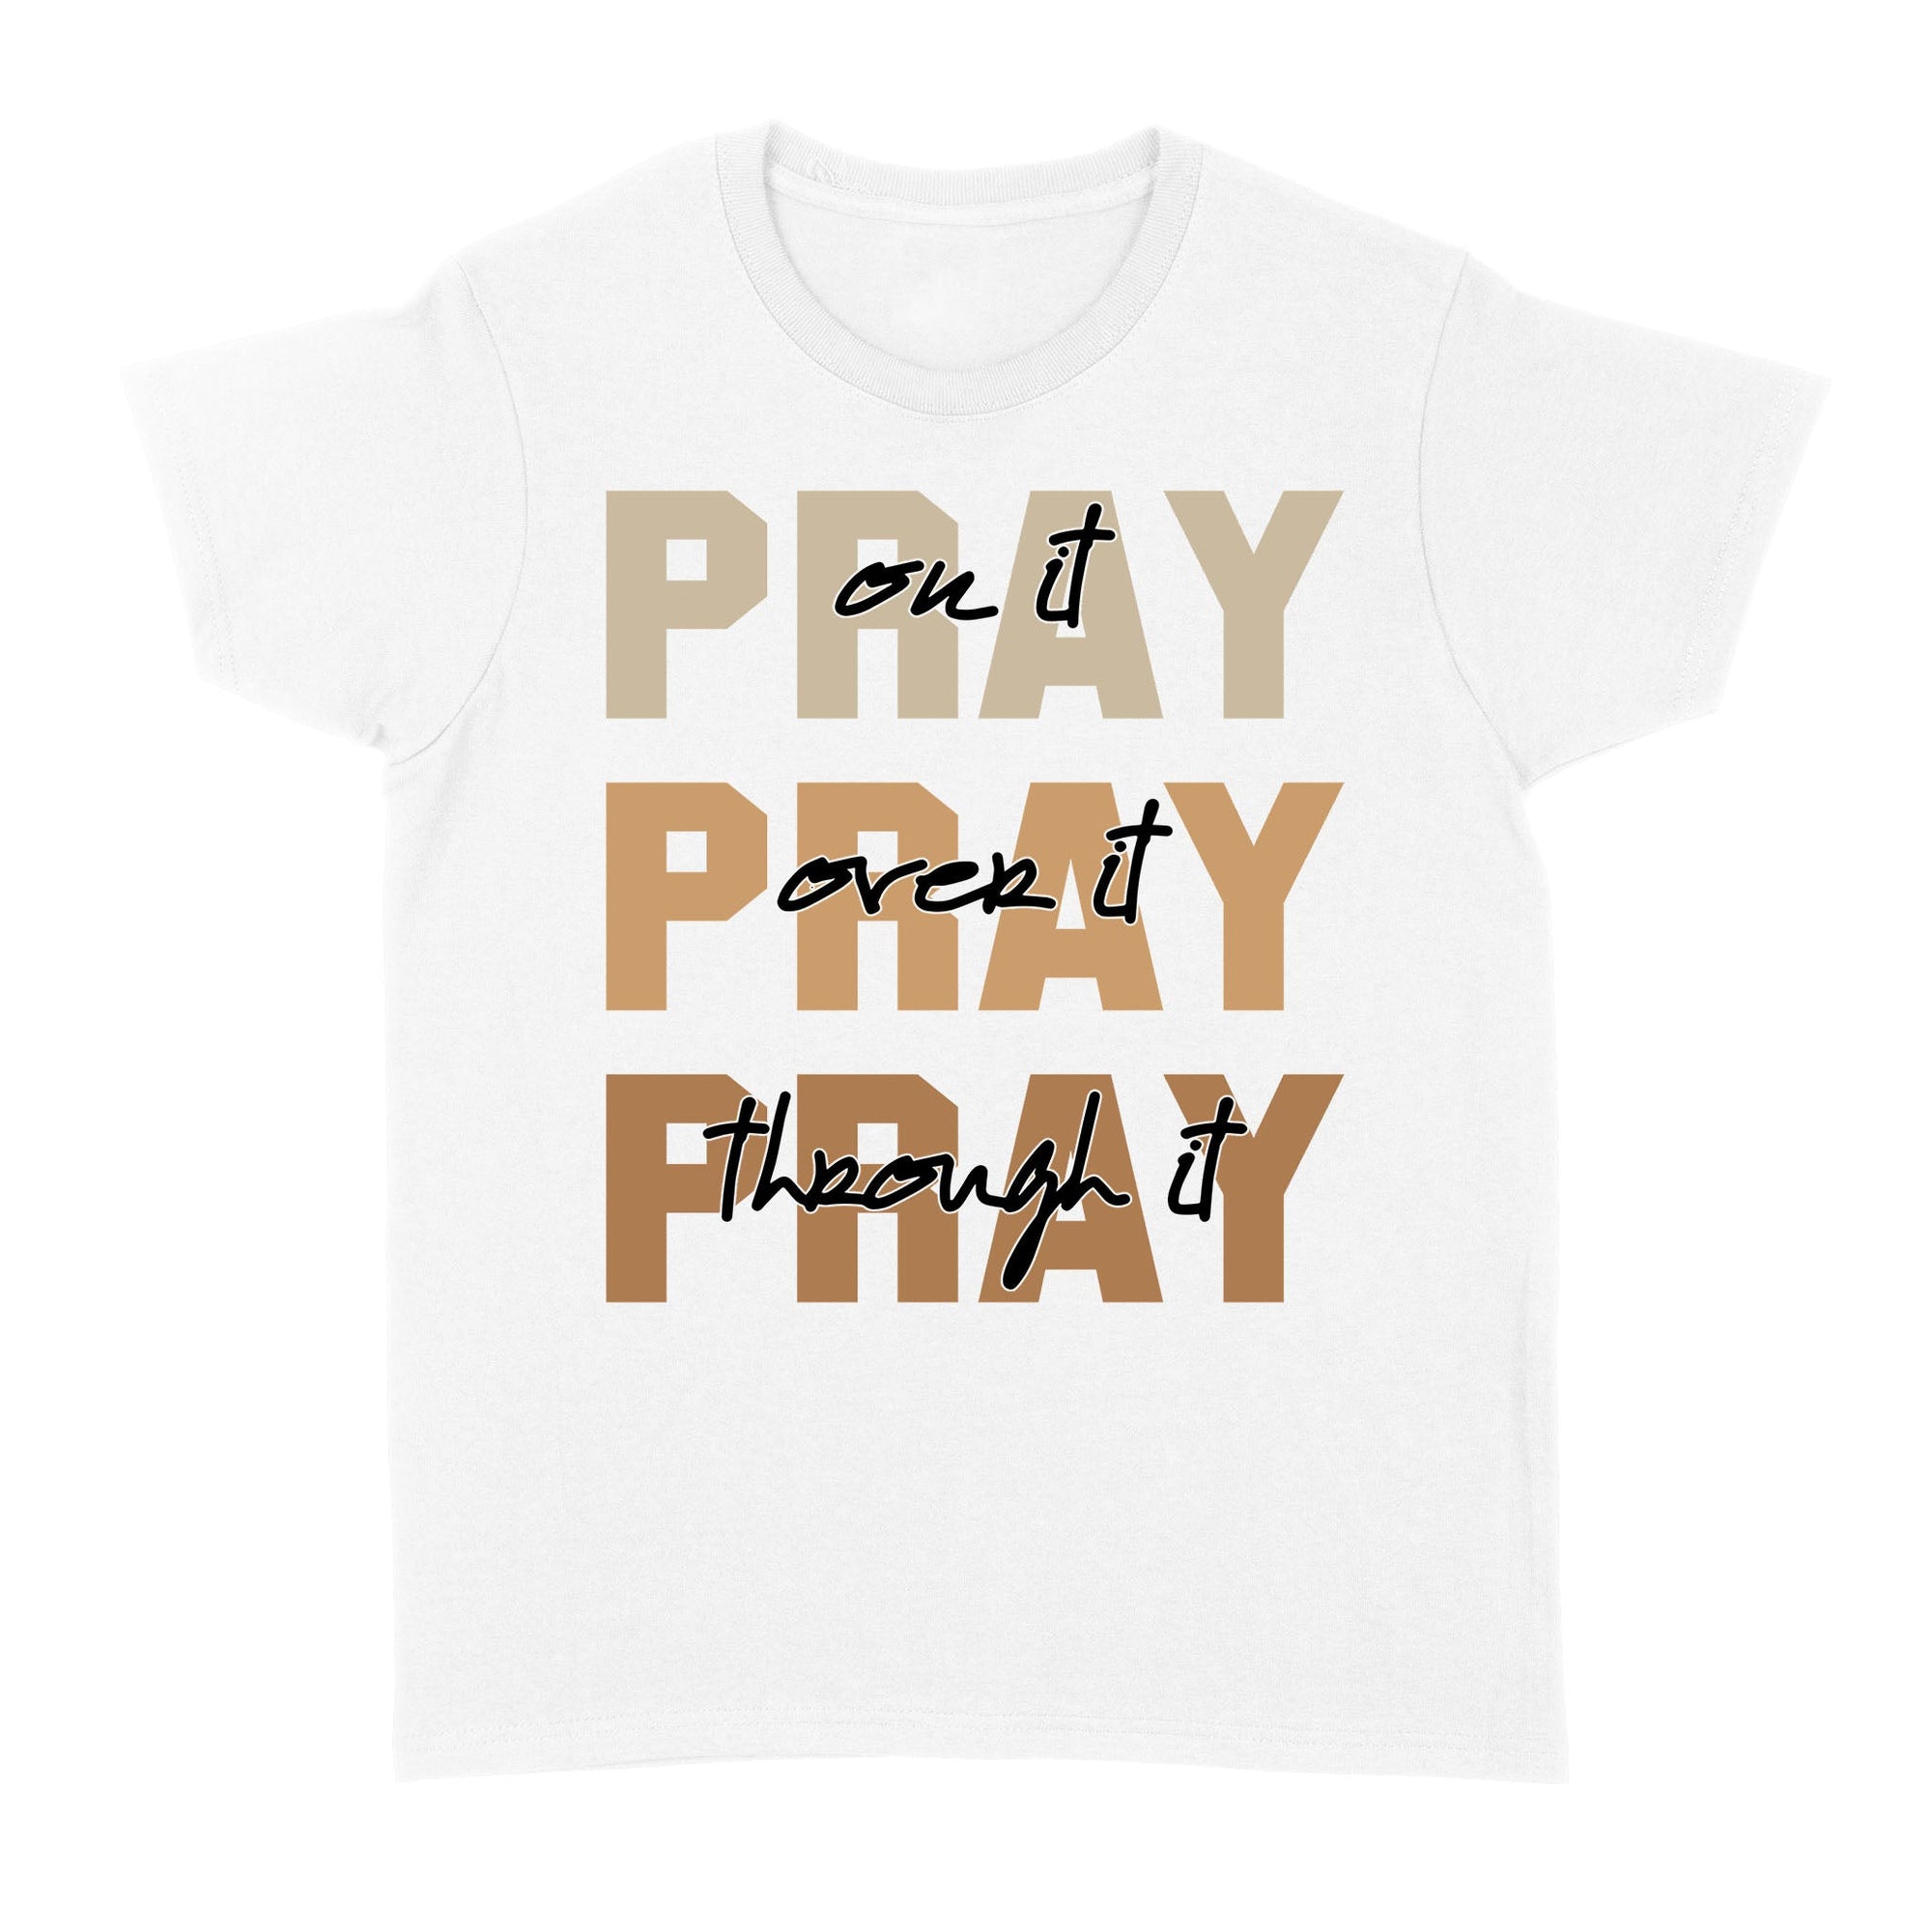 Christian Shirts, Faith T-shirt, Religious Shirt, Christian Tees, Jesus Shirt, Christian Shirts for Women and Men, Pray on It Standard Women's T-shirt